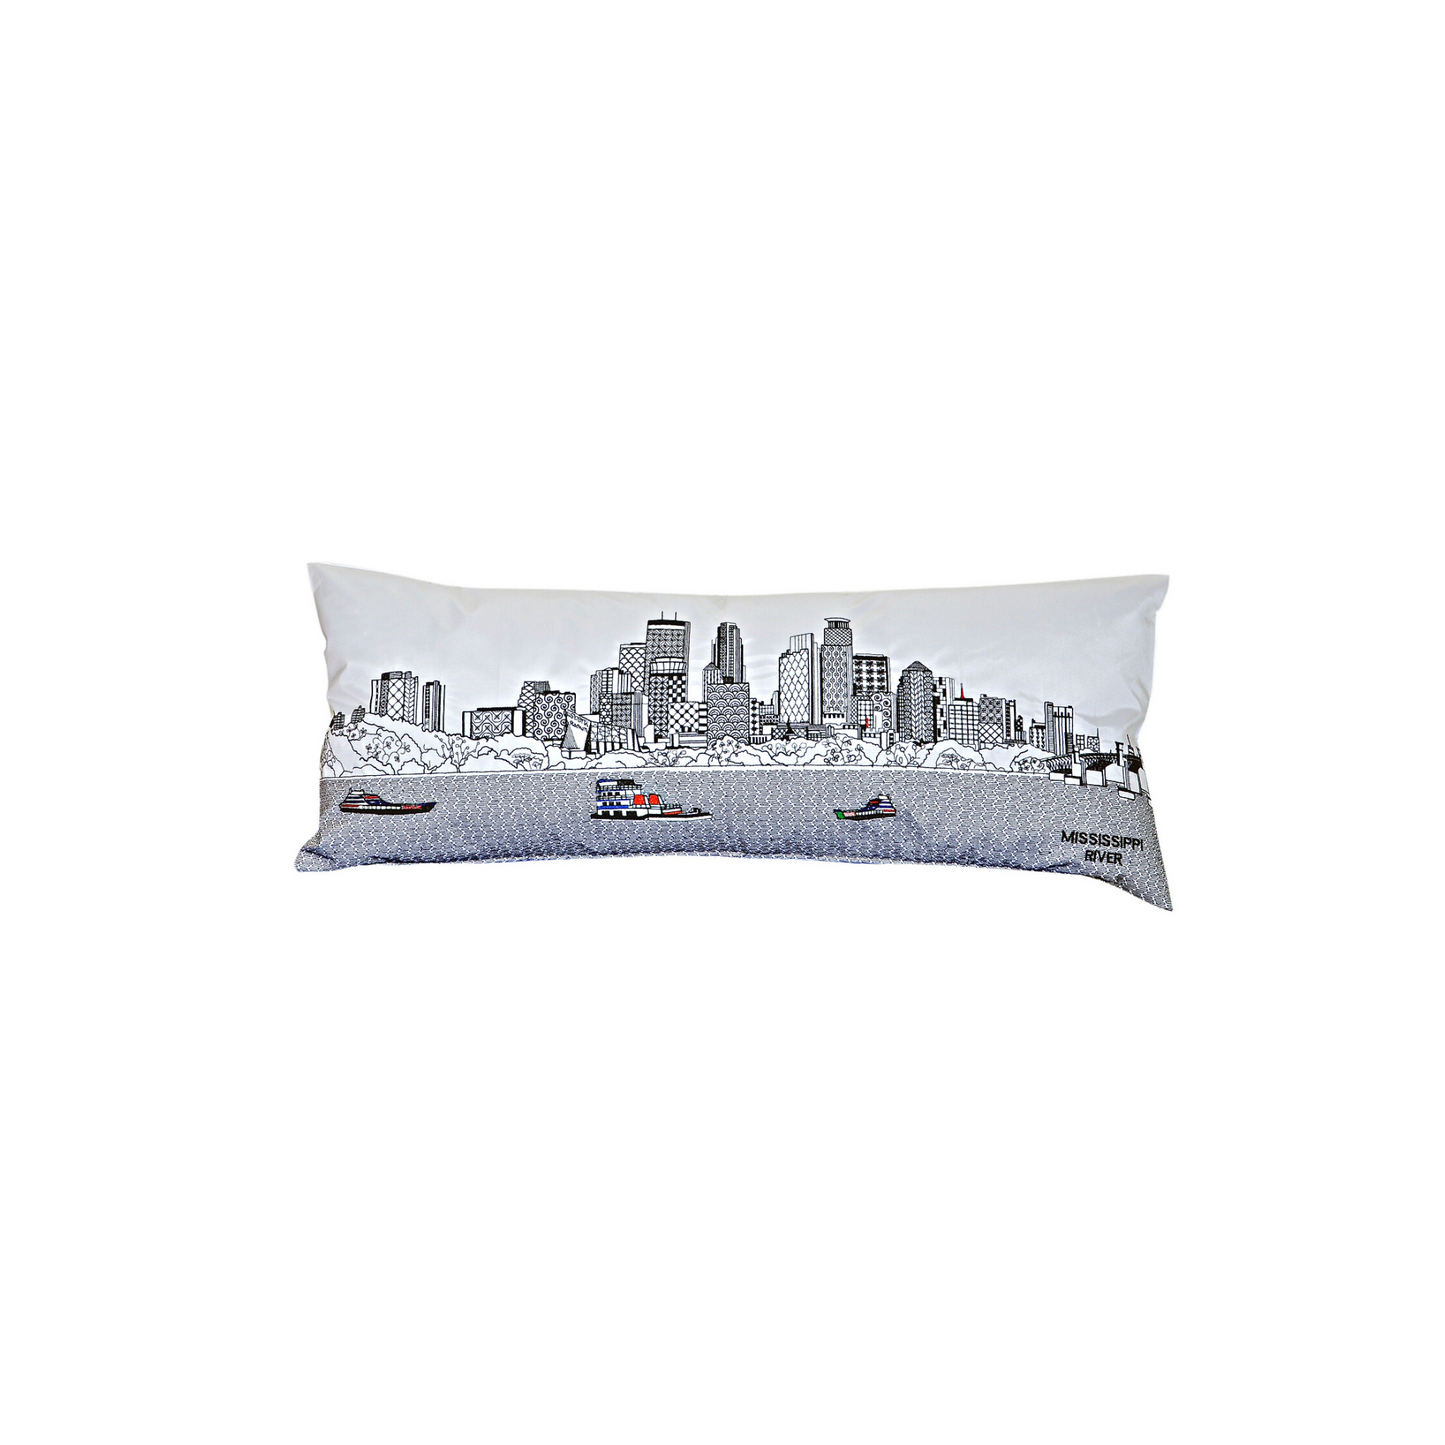 Minneapolis Outdoor Pillow